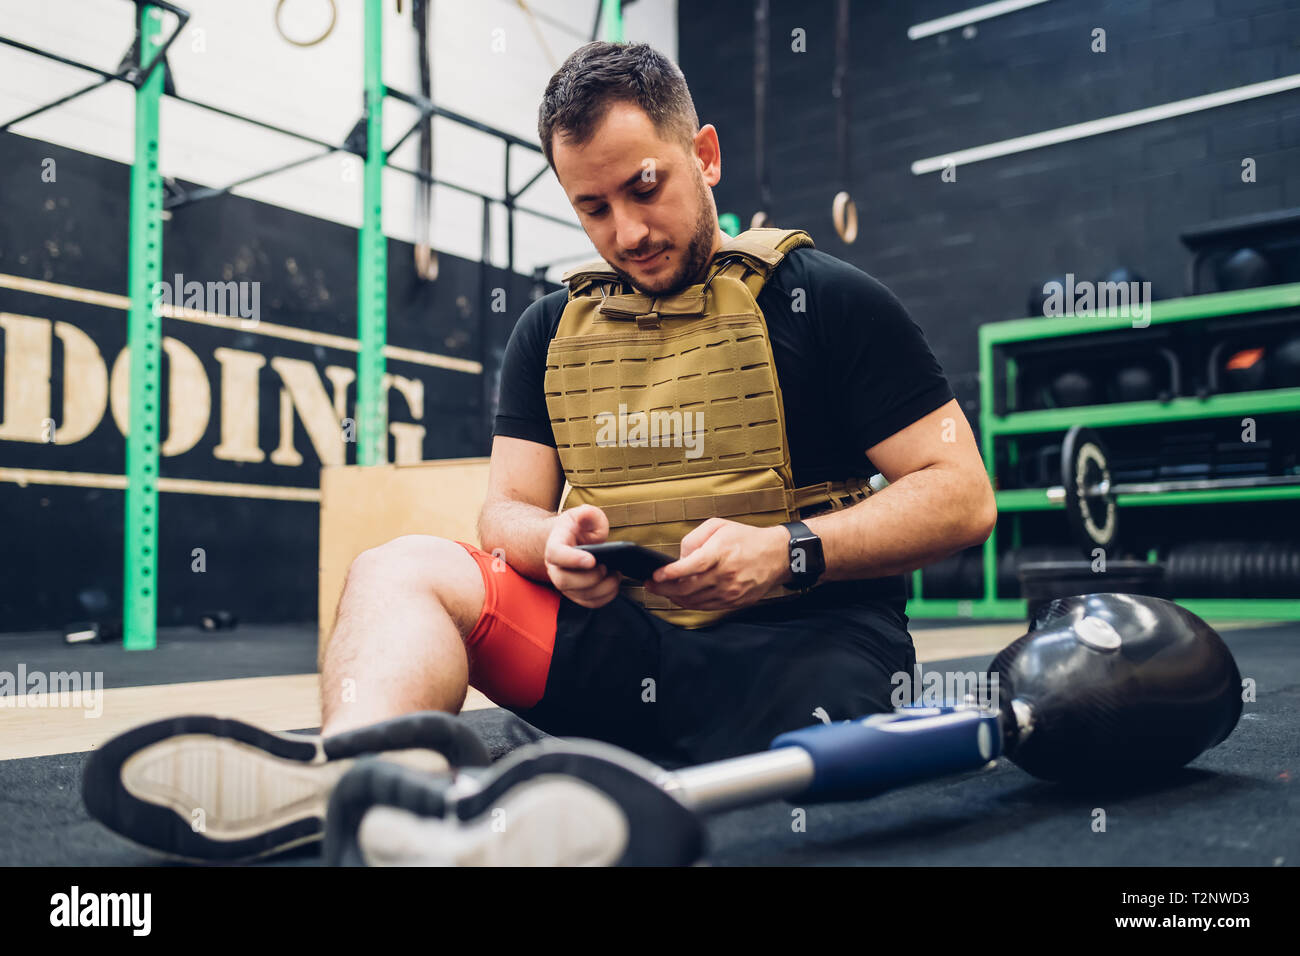 Man with prosthetic leg sitting on gym floor texting Stock Photo